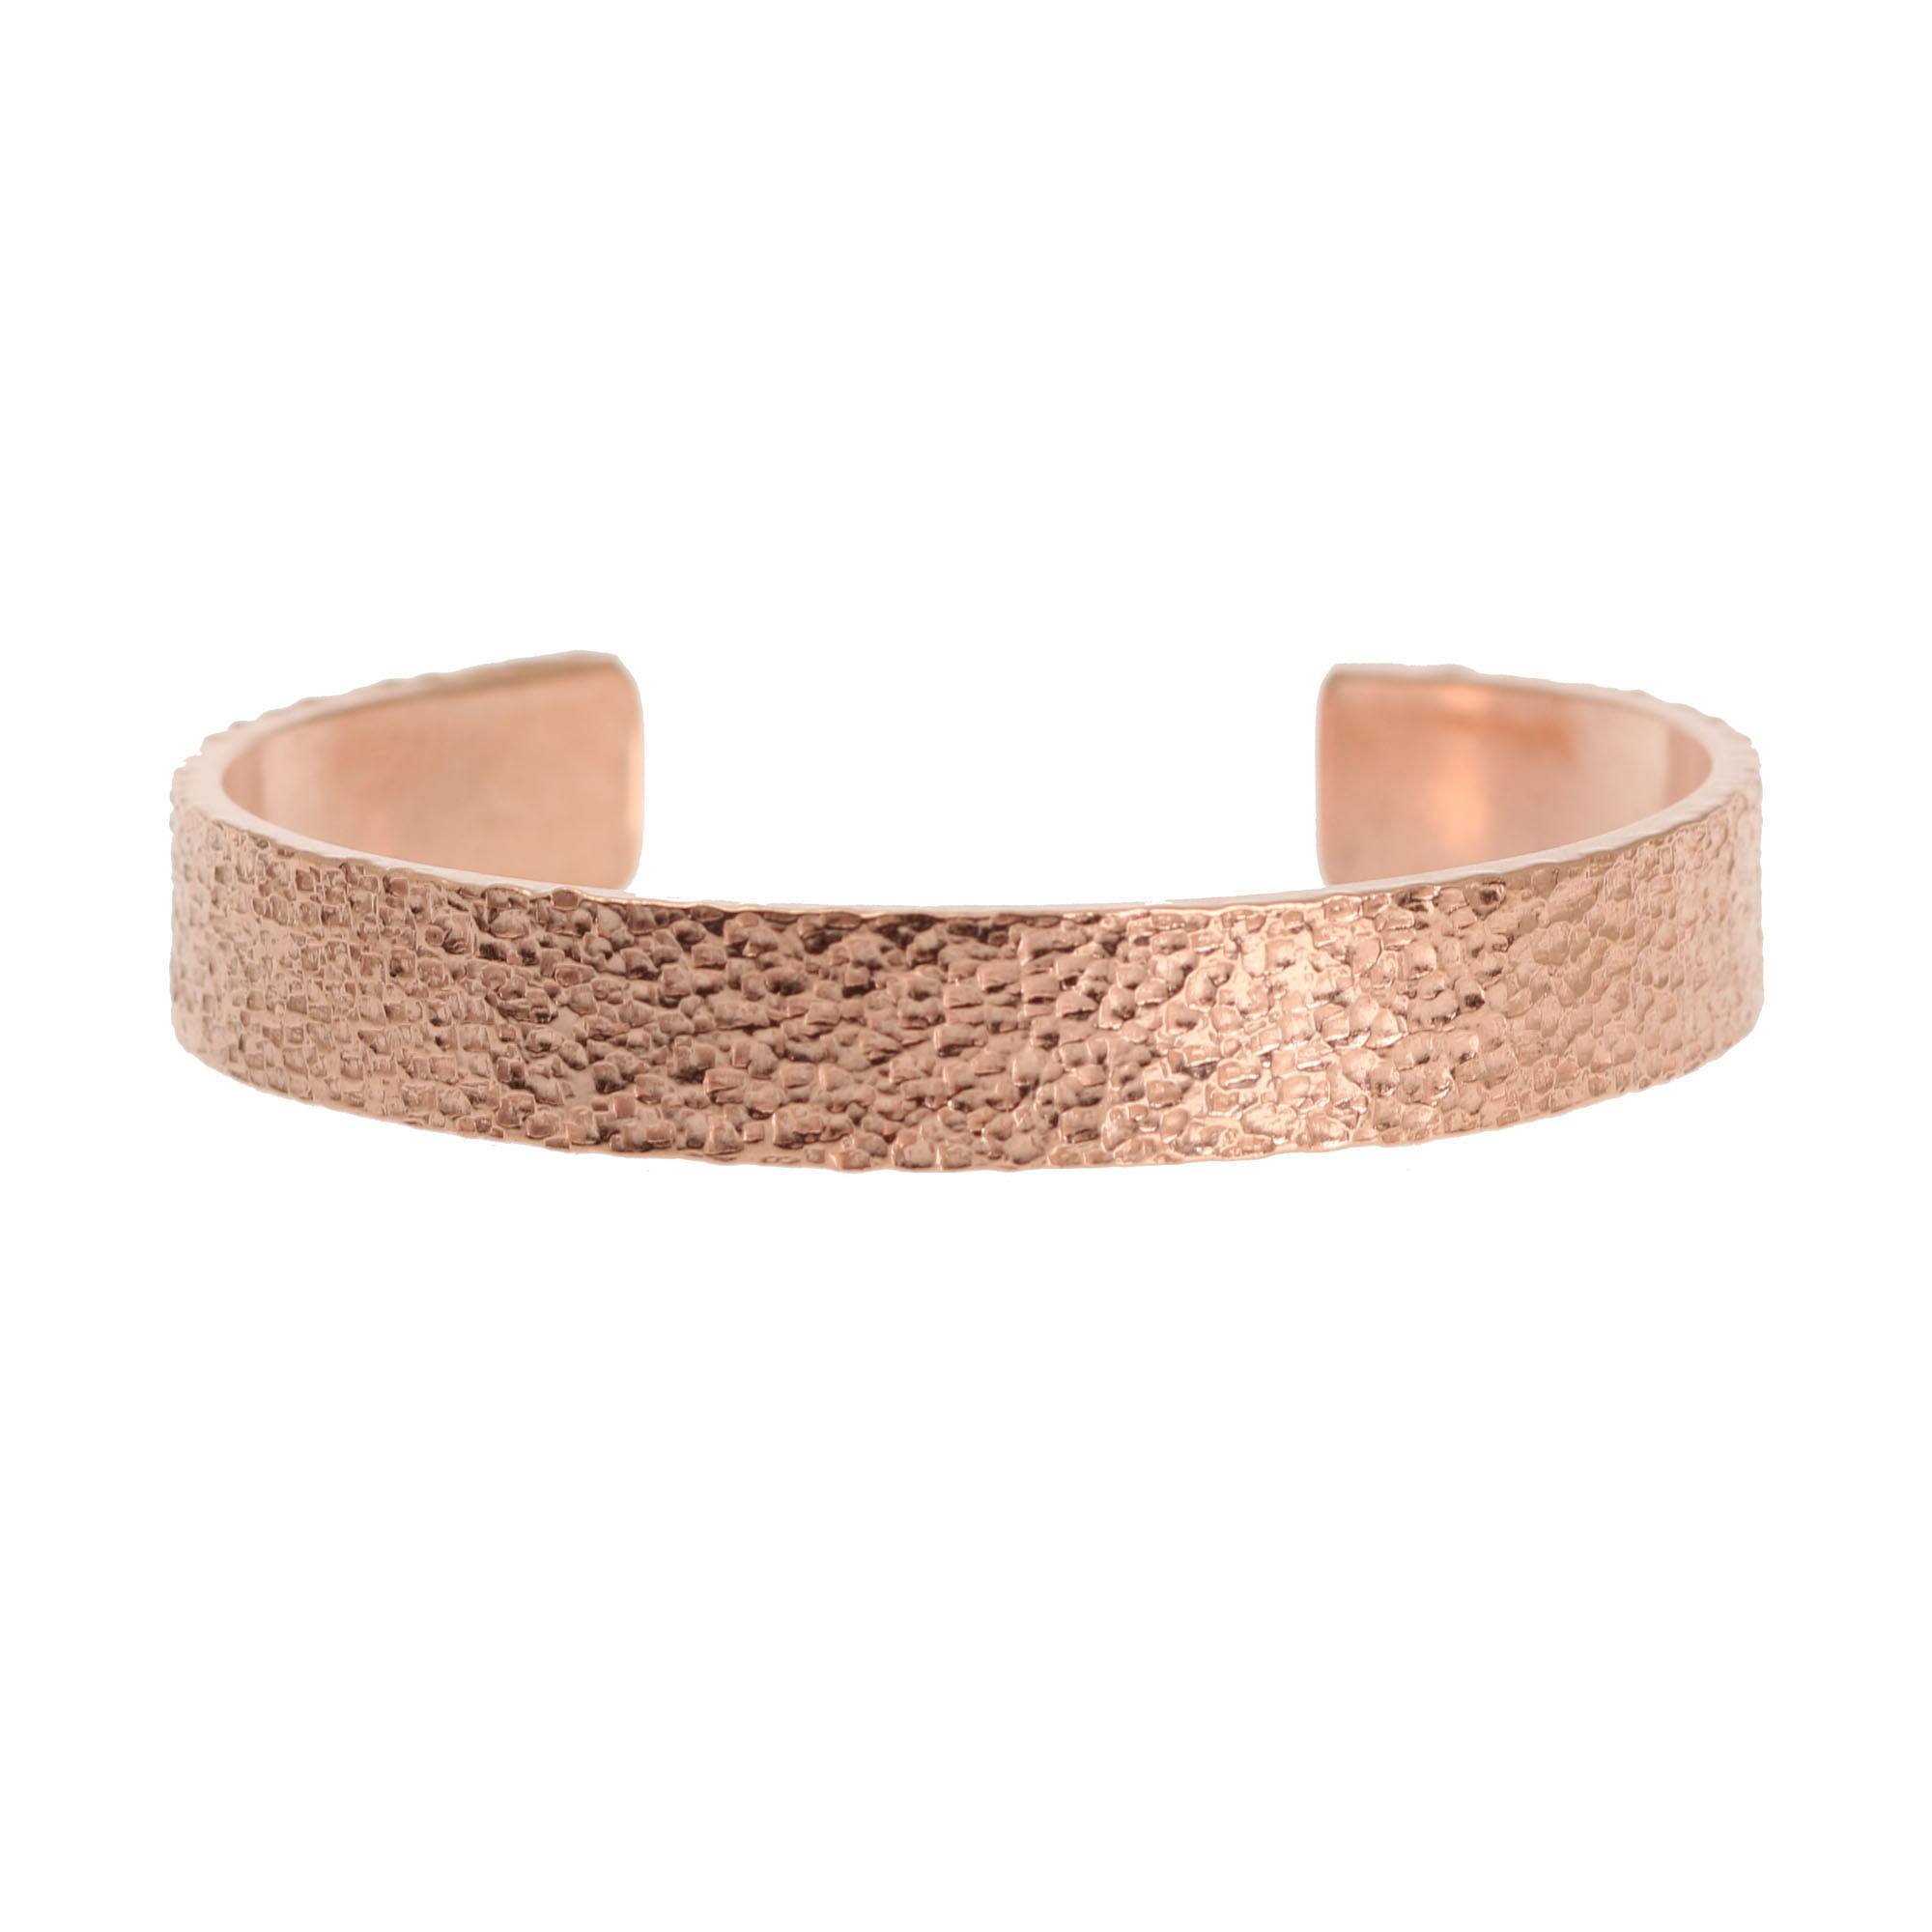 Detail of 10mm Wide Men's Texturized Copper Cuff Bracelet